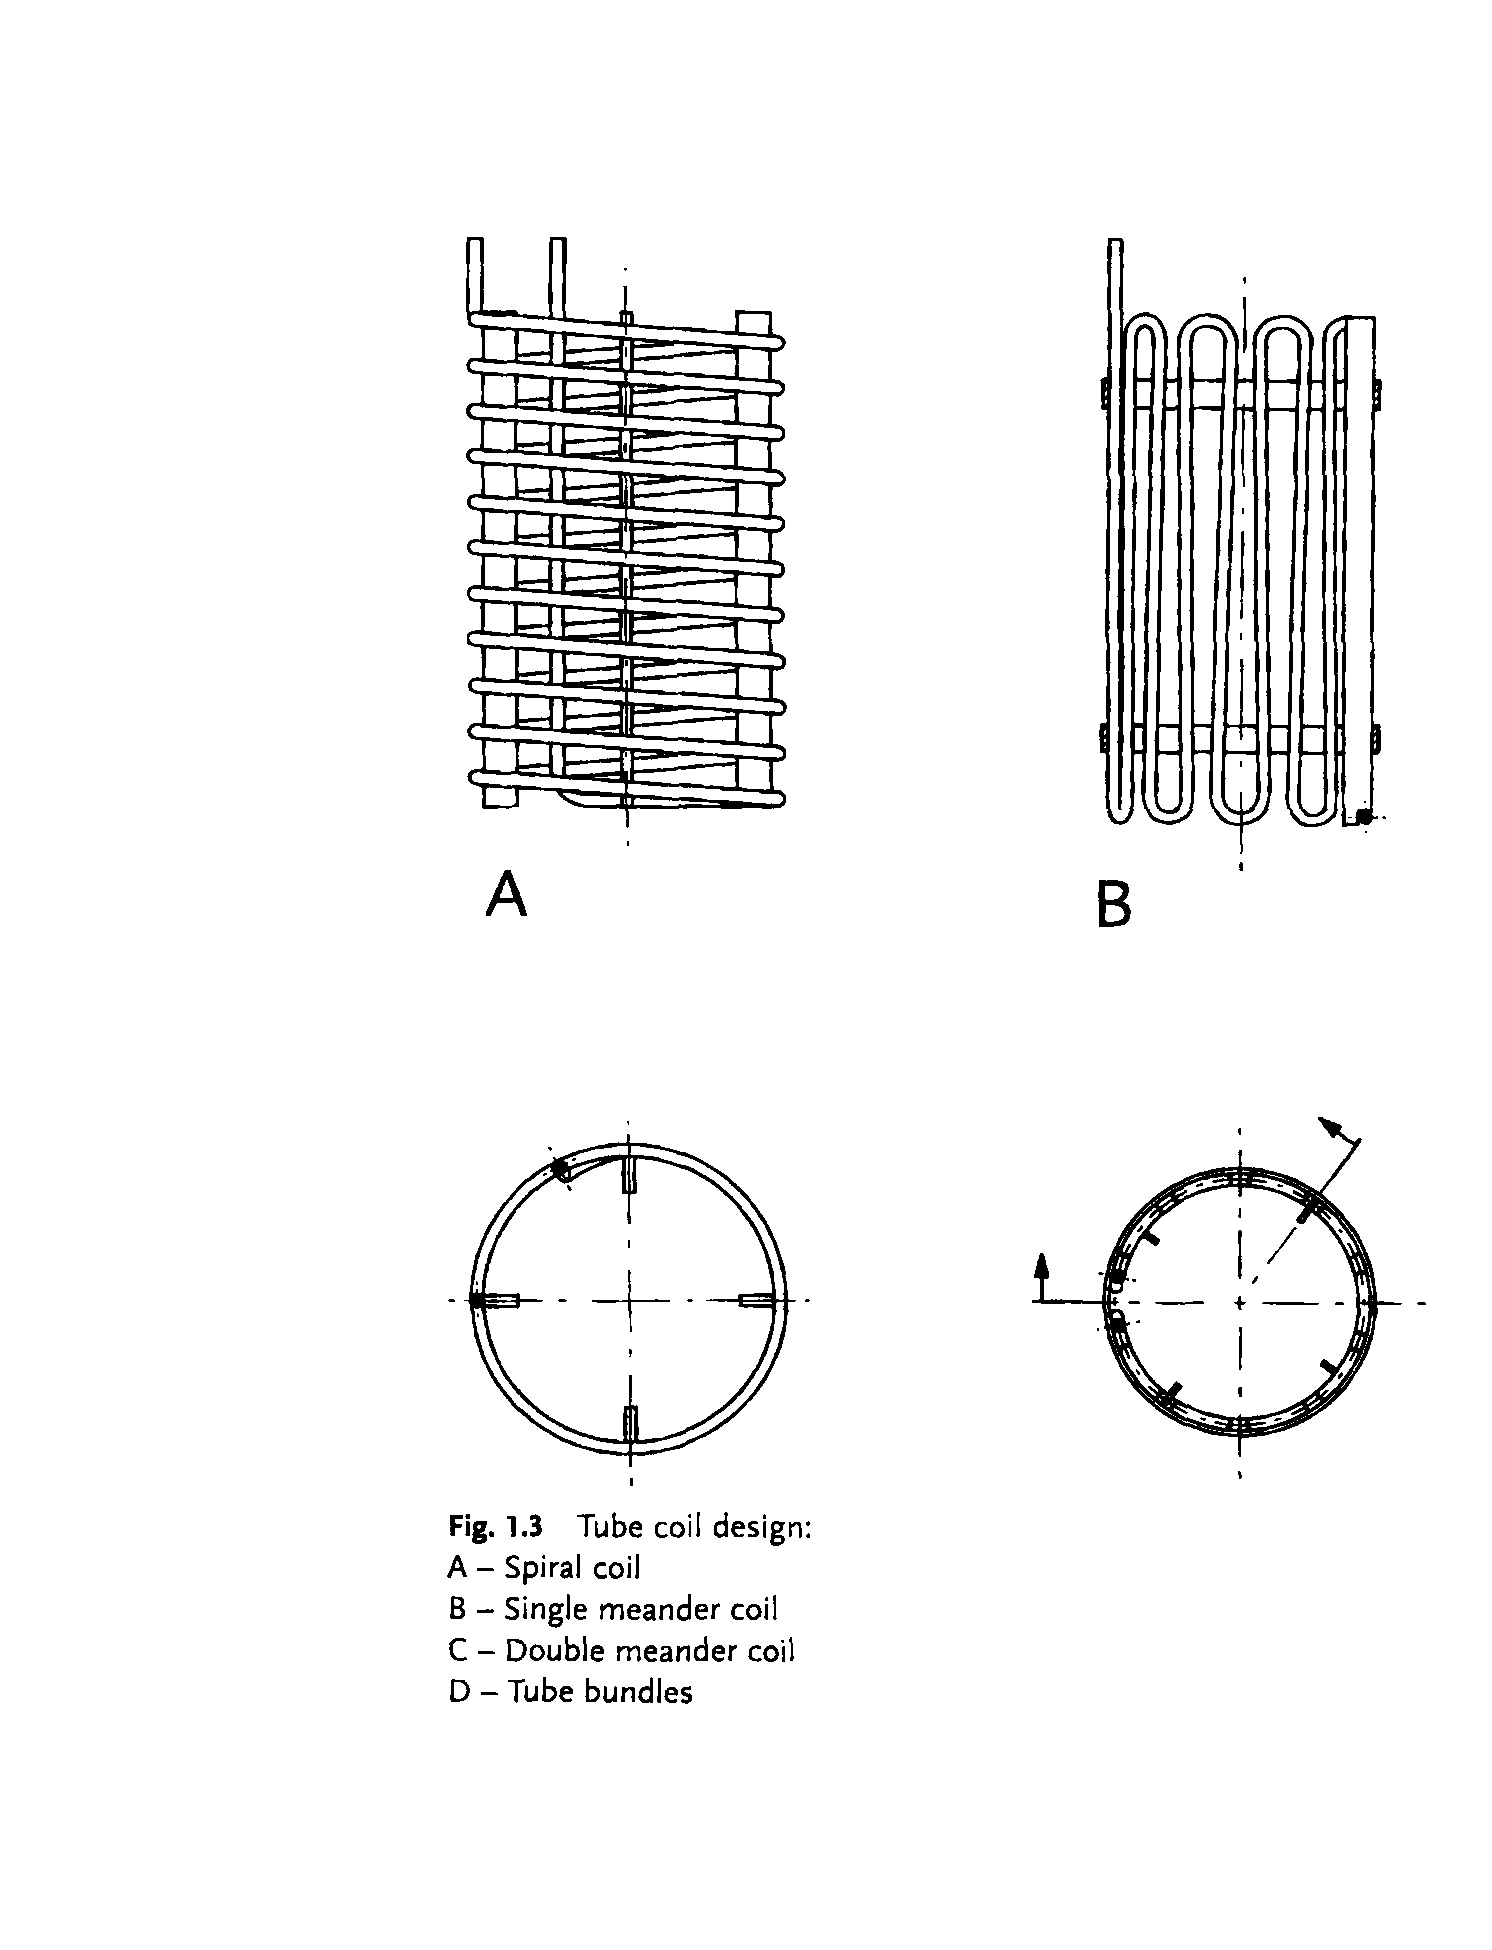 Fig. 1.3 Tube coil design A - Spiral coil B - Single meander coil C - Double meander coil D - Tube bundles...